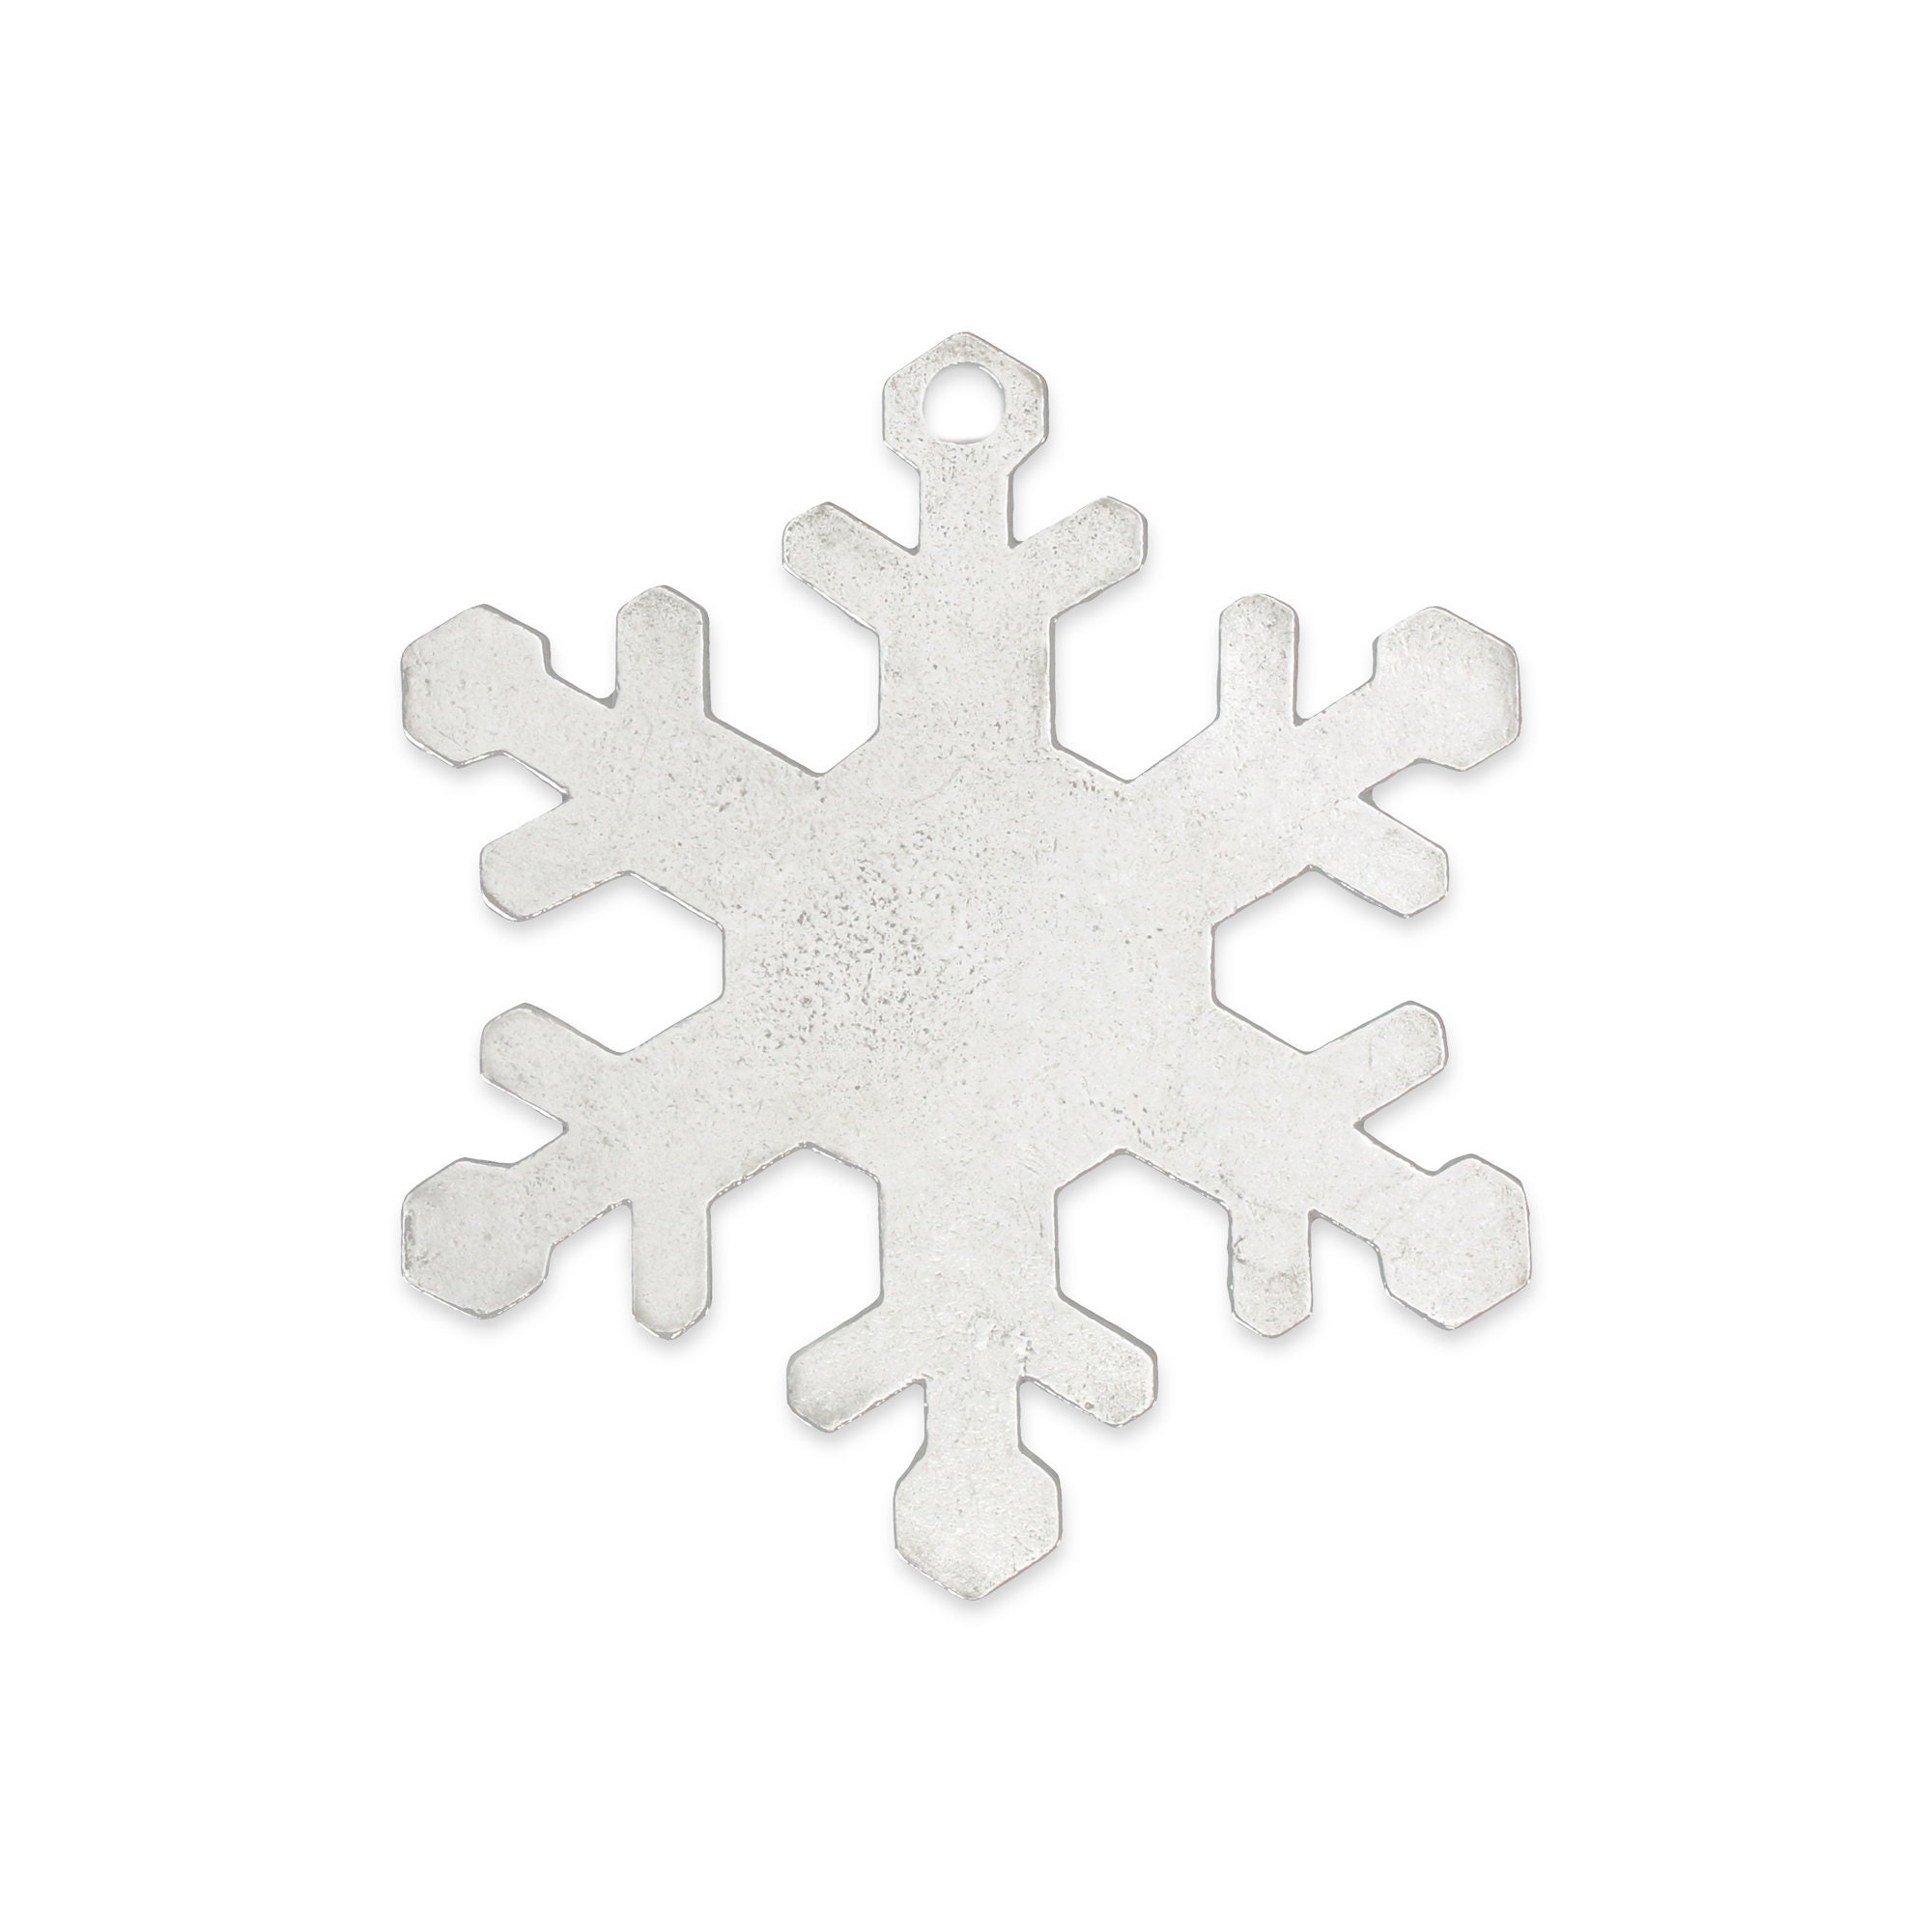 Leaf Snowflake Metal Design Stamp, 10mm - Beaducation Original